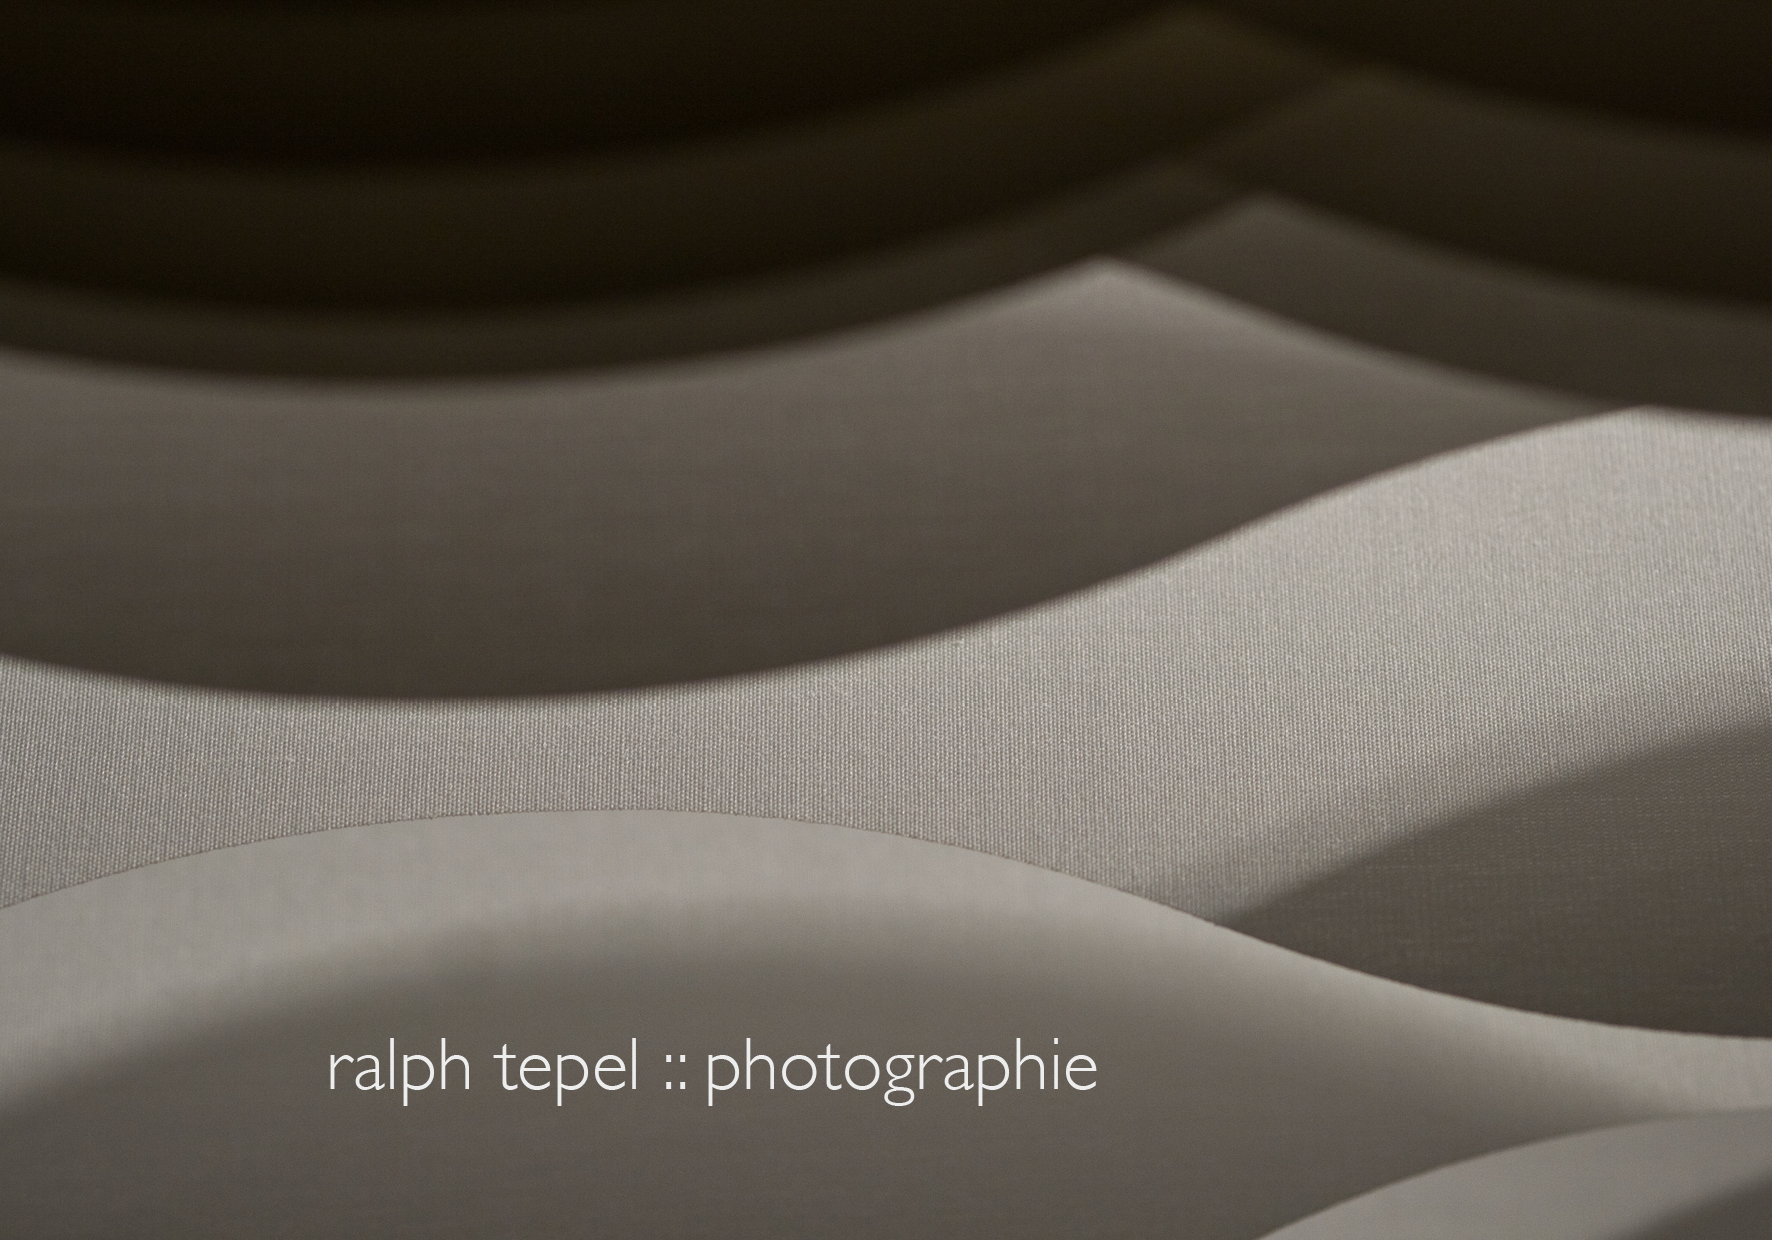 galerie dr. Jochim präsentiert ralph tepel :: photographie ab 1. Oktober 2022 um 14 Uhr